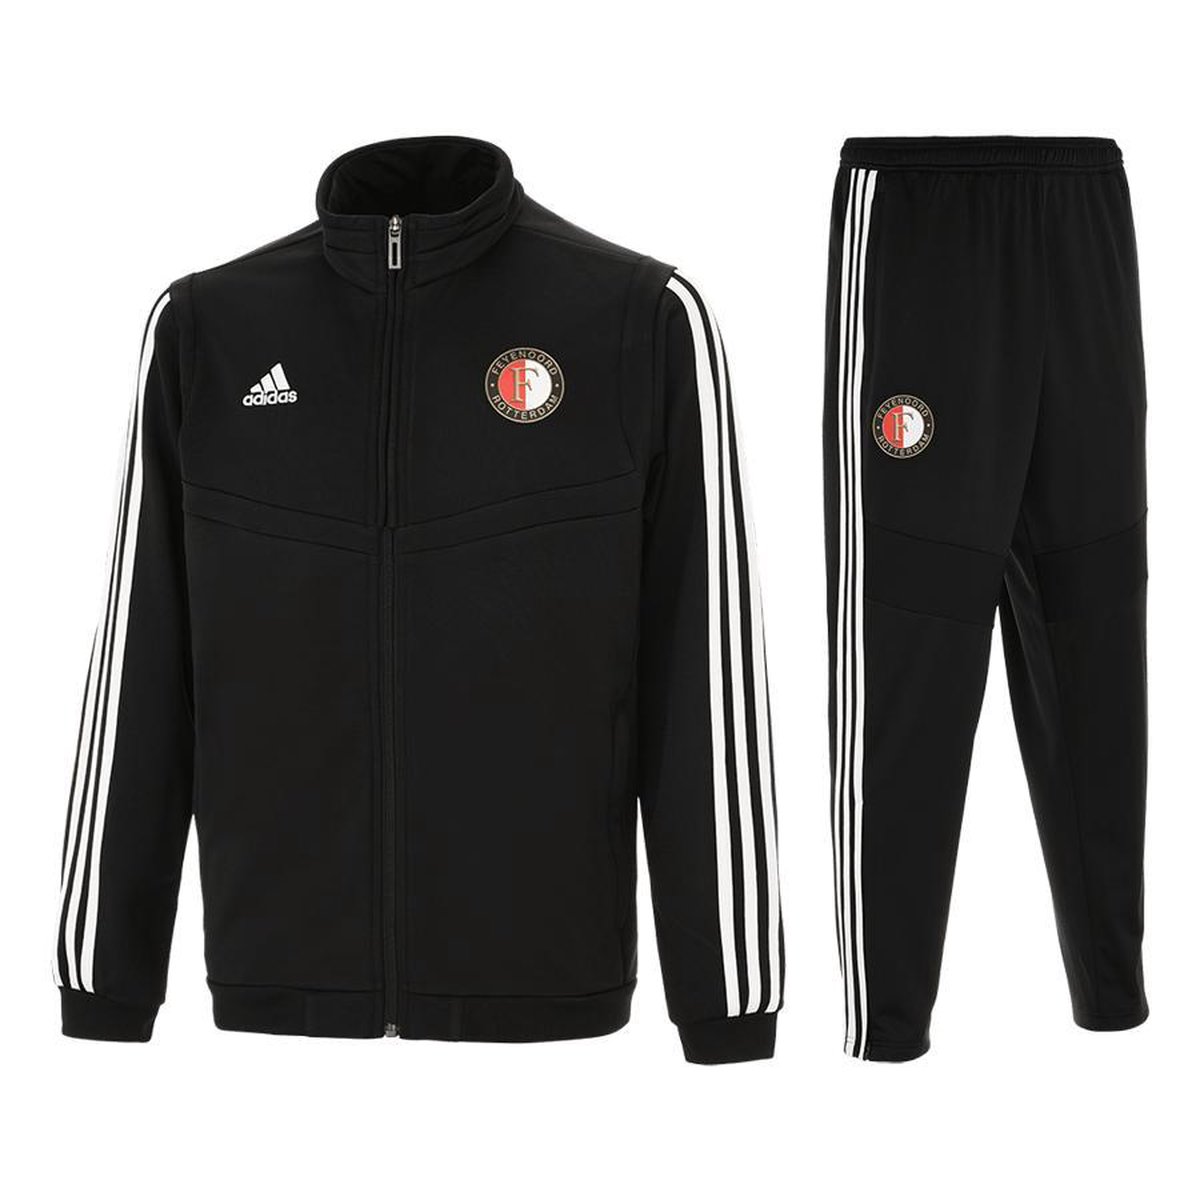 Feyenoord Trainingspak Spelers, zwart 2019/20 kids | bol.com